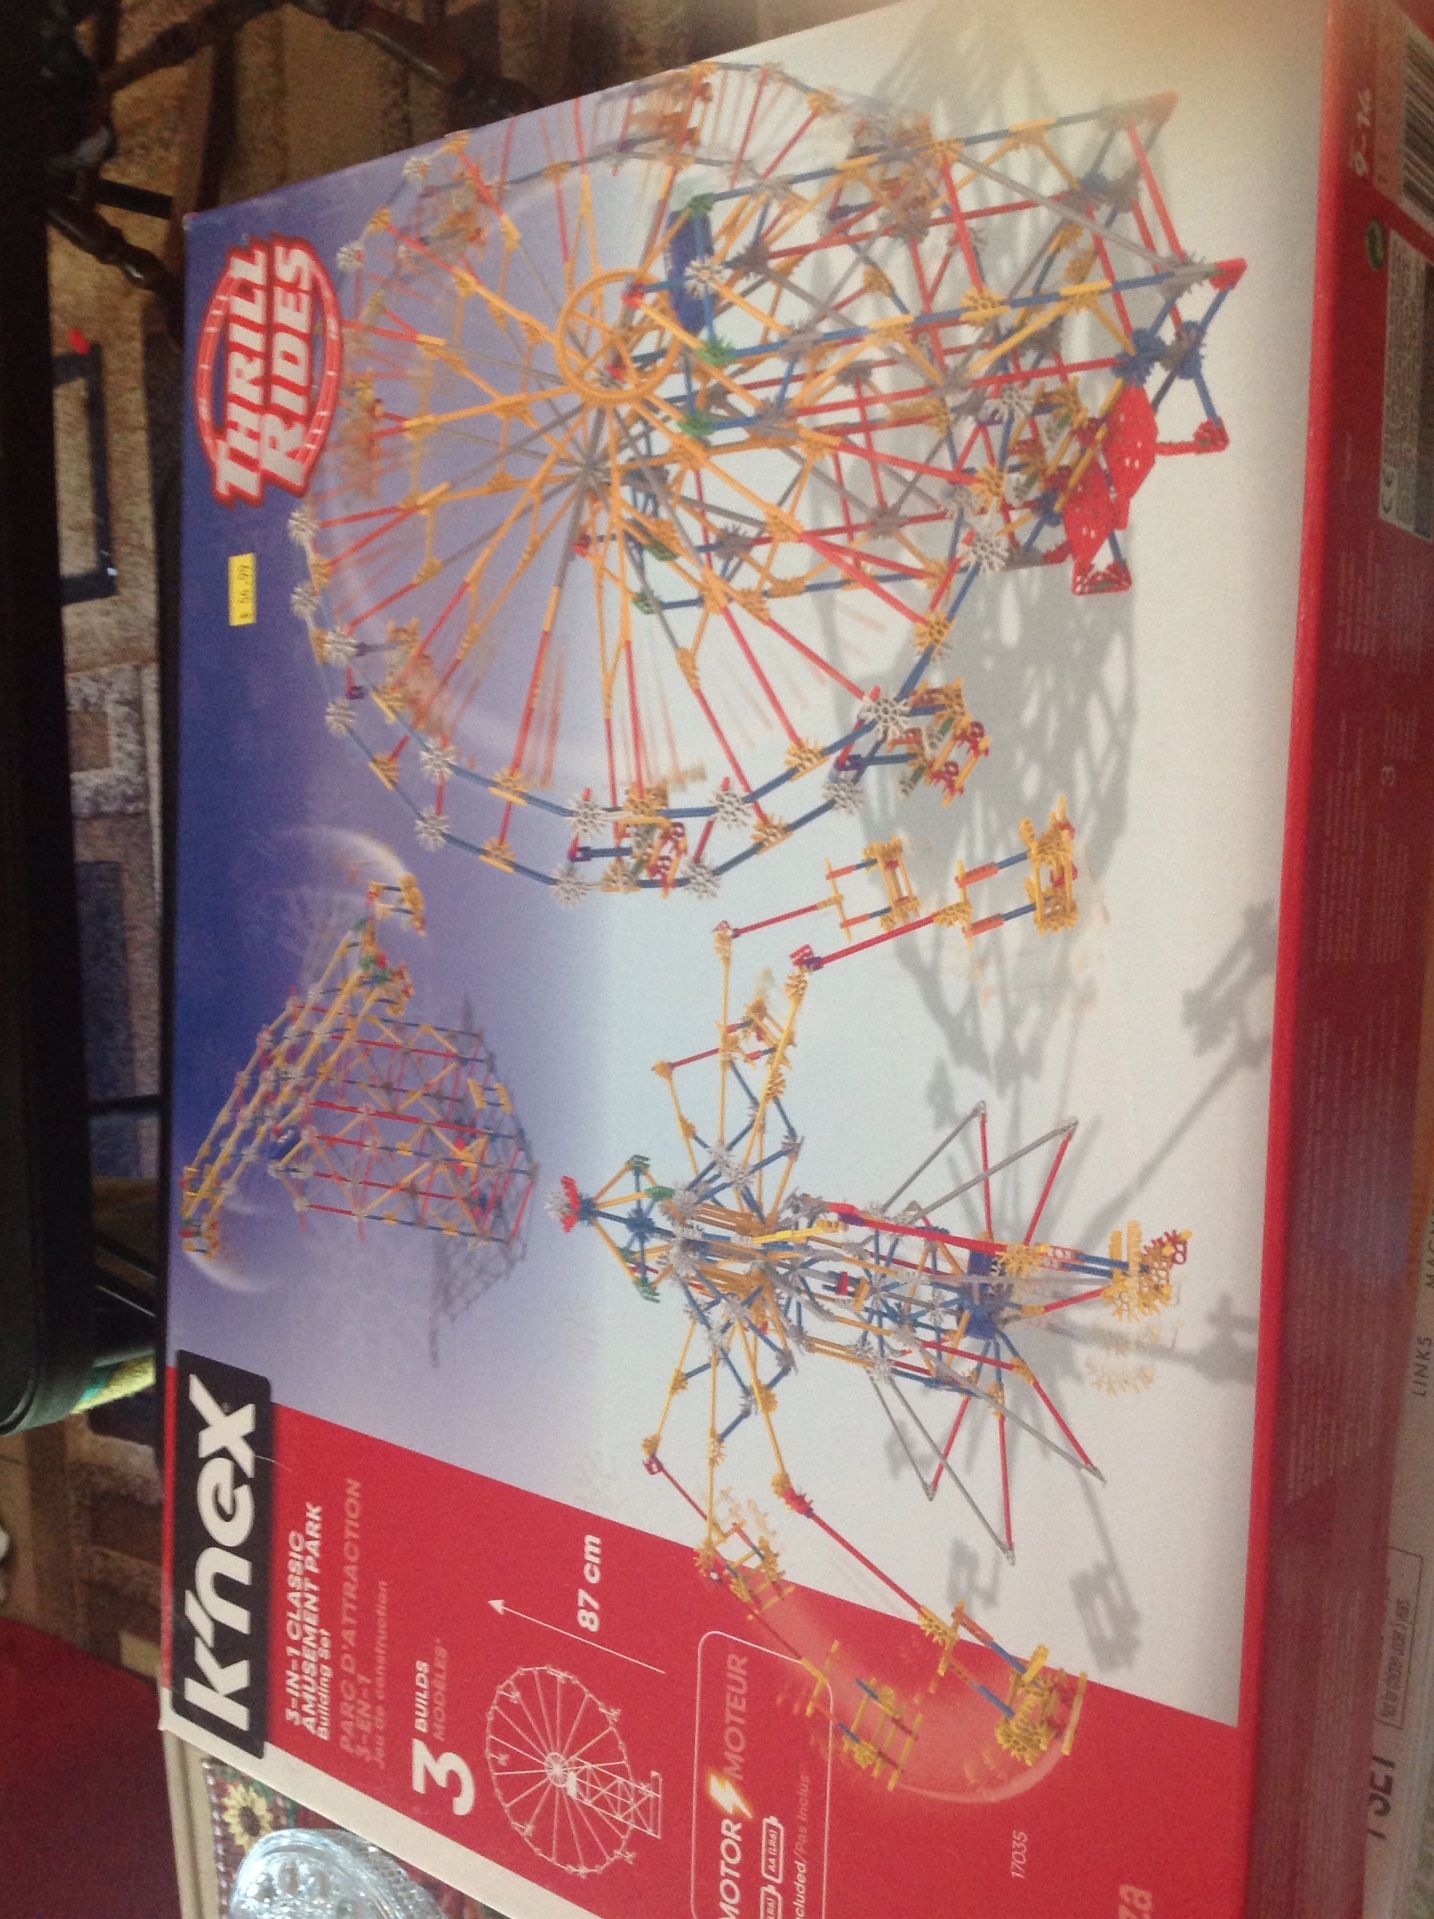 K'nex744 pieces Ferris Wheel